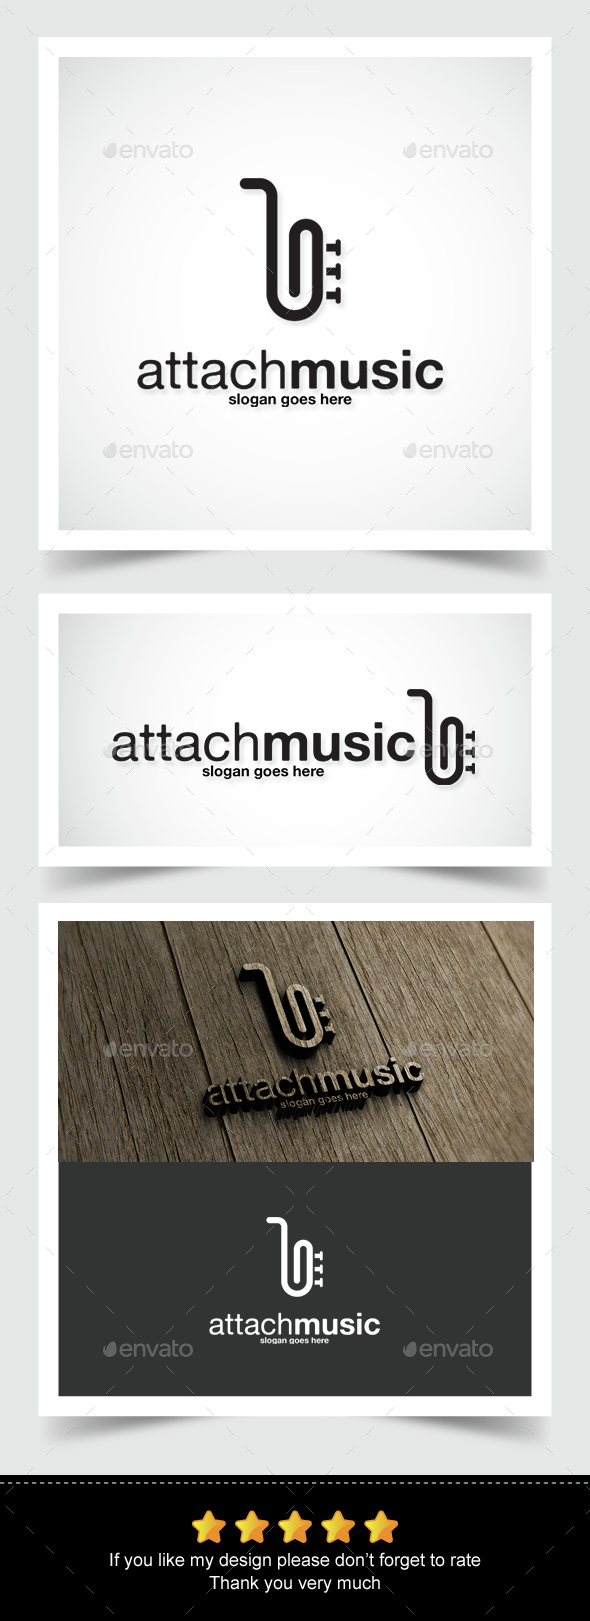 Attach Music Logo